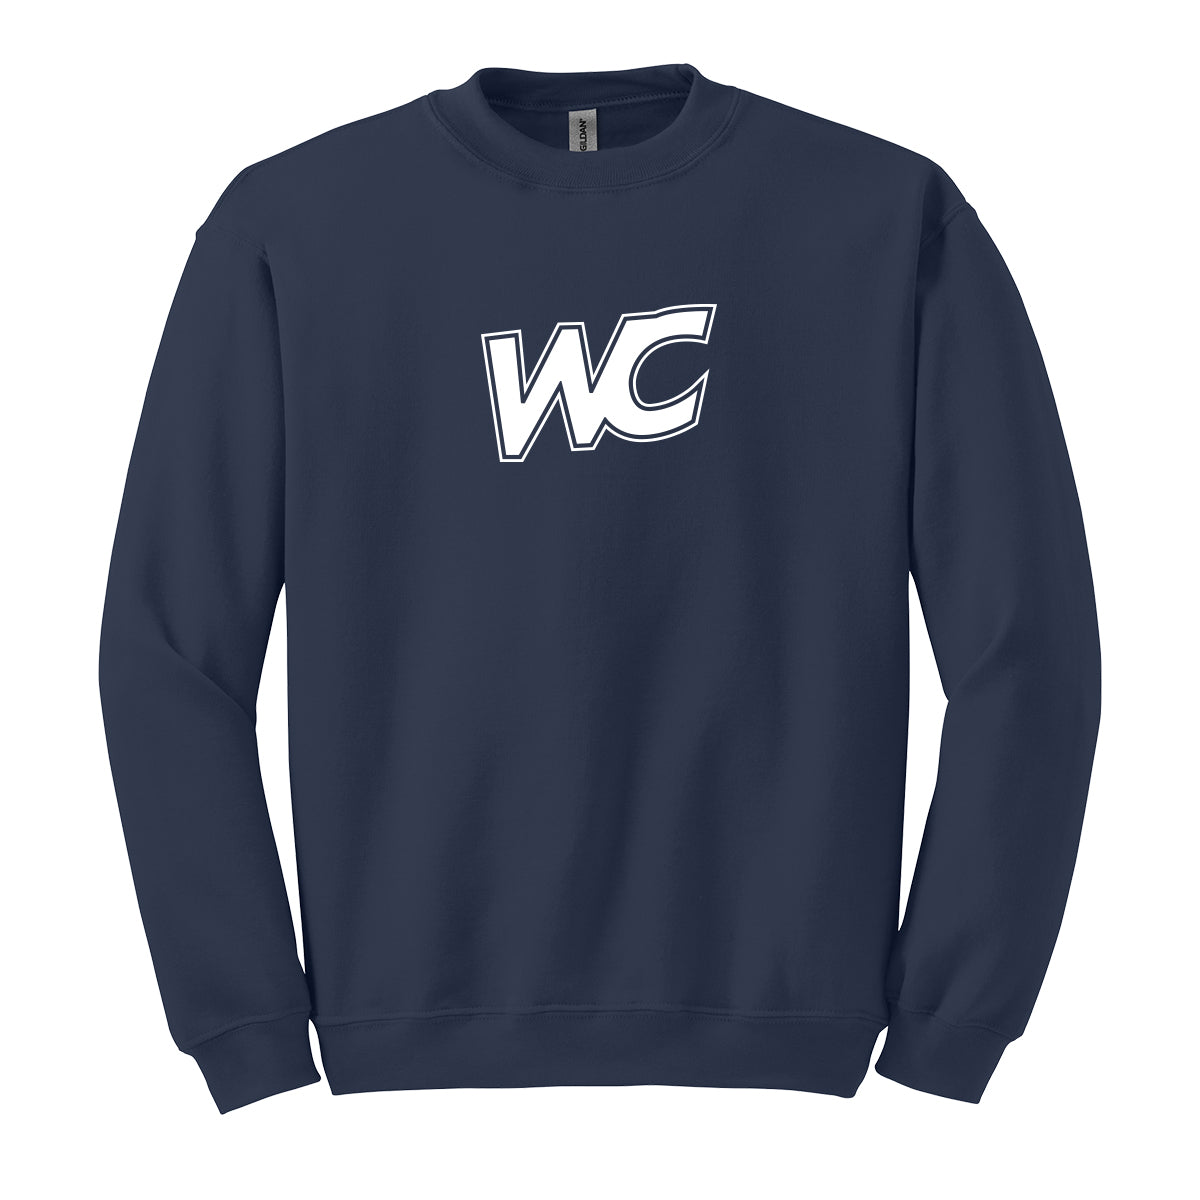 WC Crewneck Sweatshirt